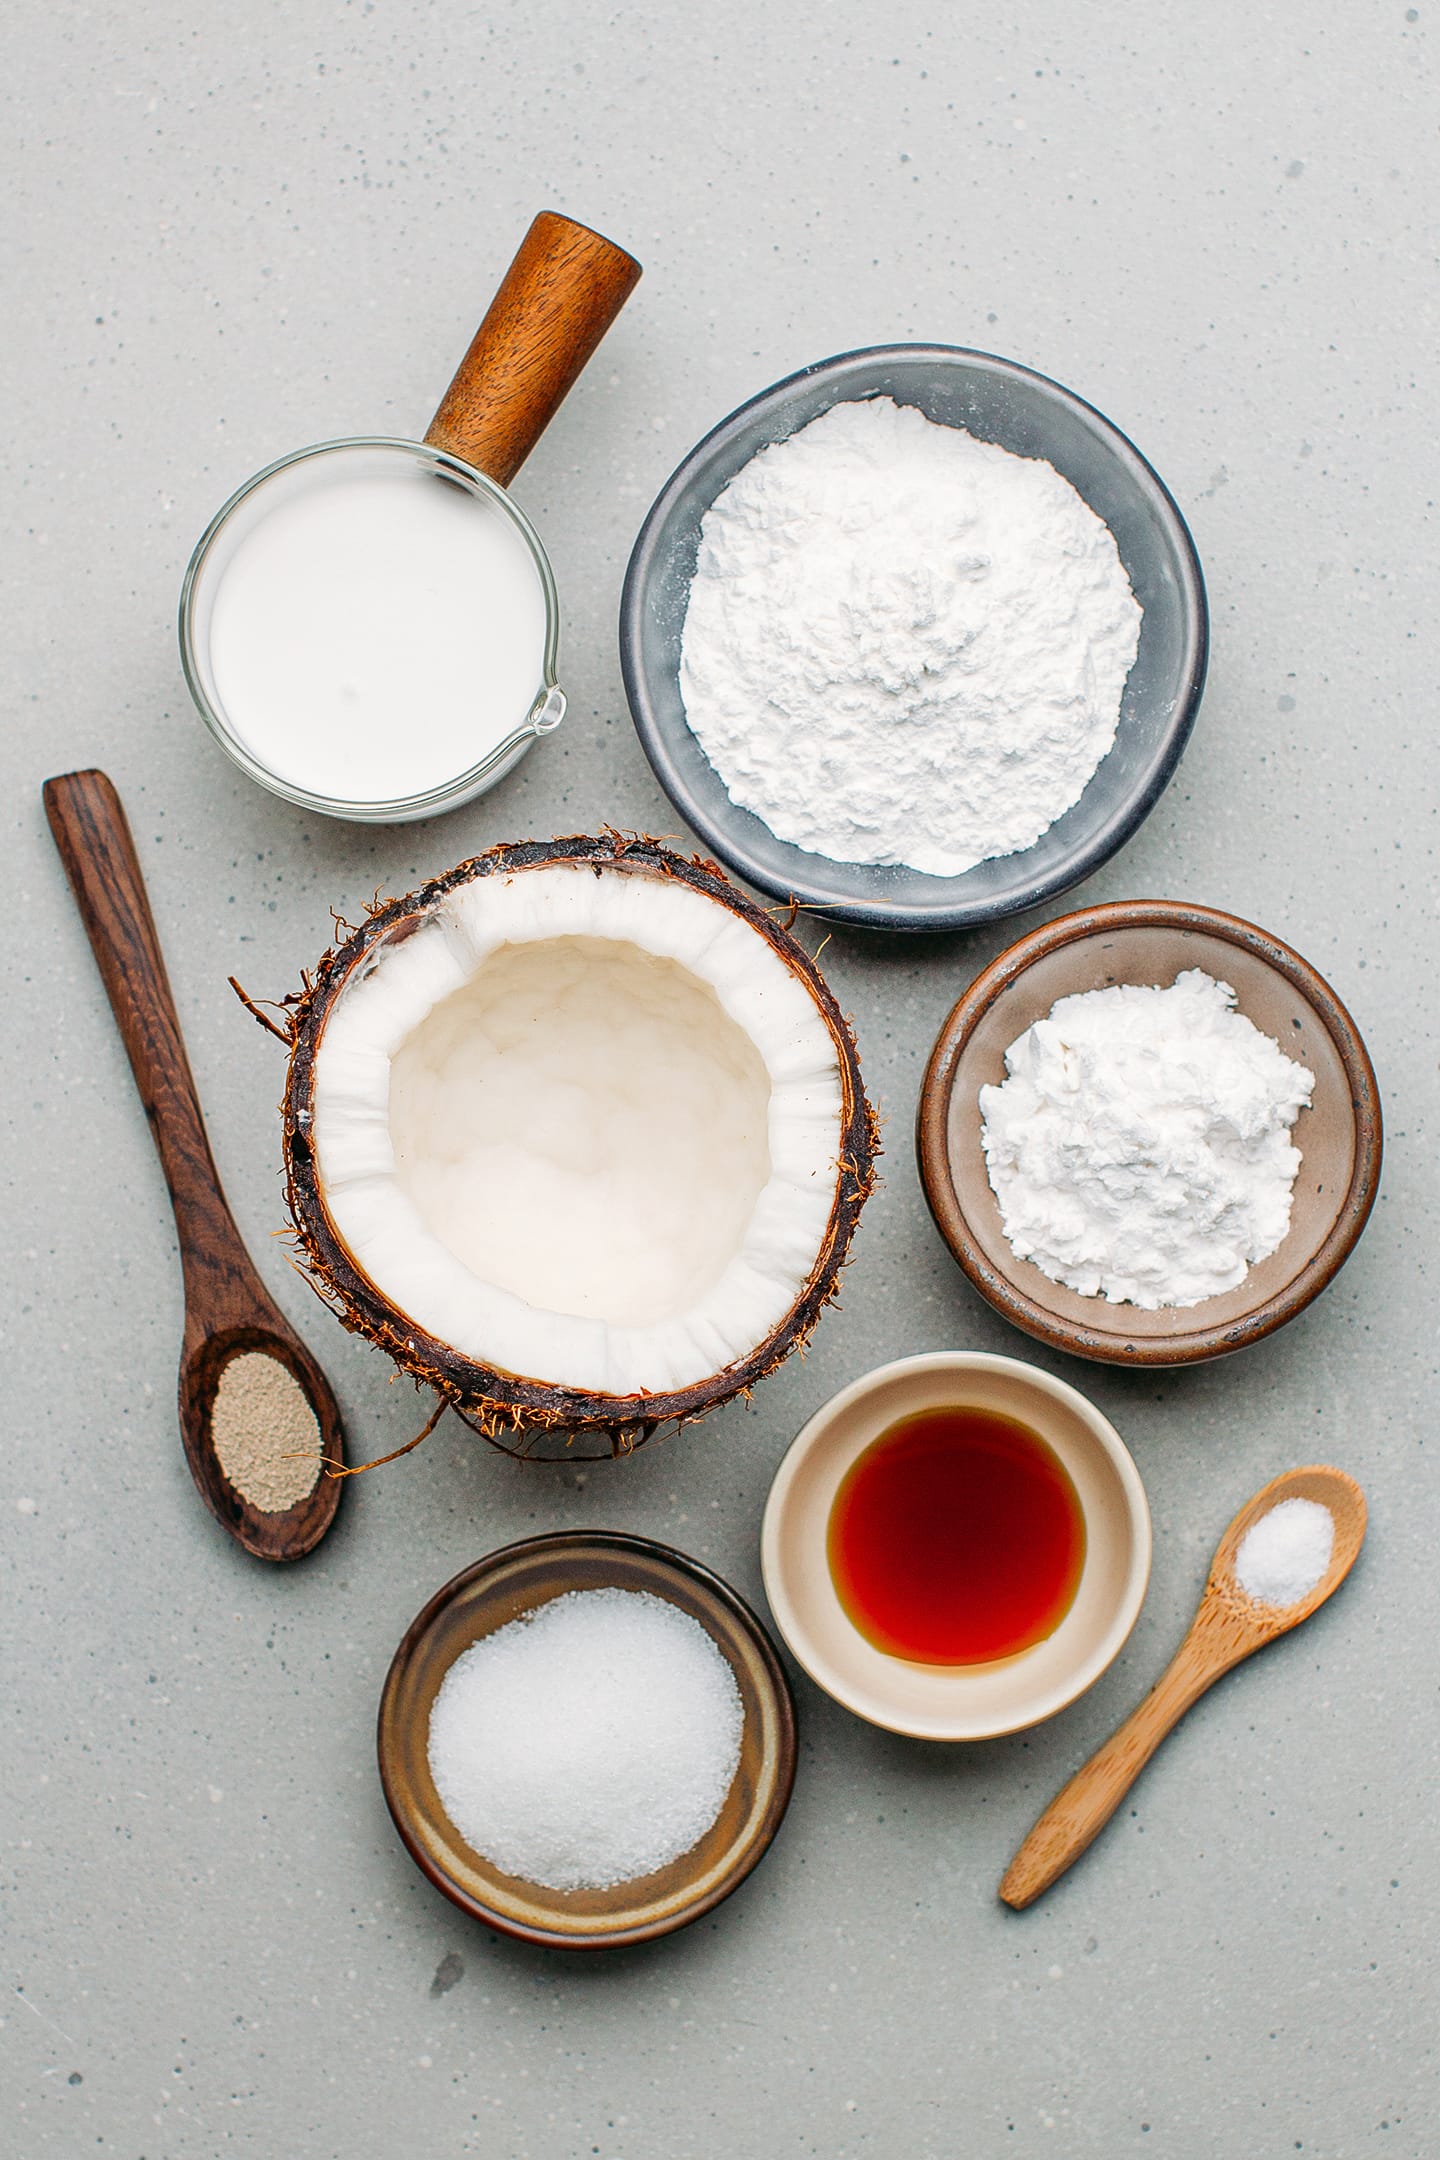 Ingredients like rice flour, tapioca starch, yeast, and coconut milk.